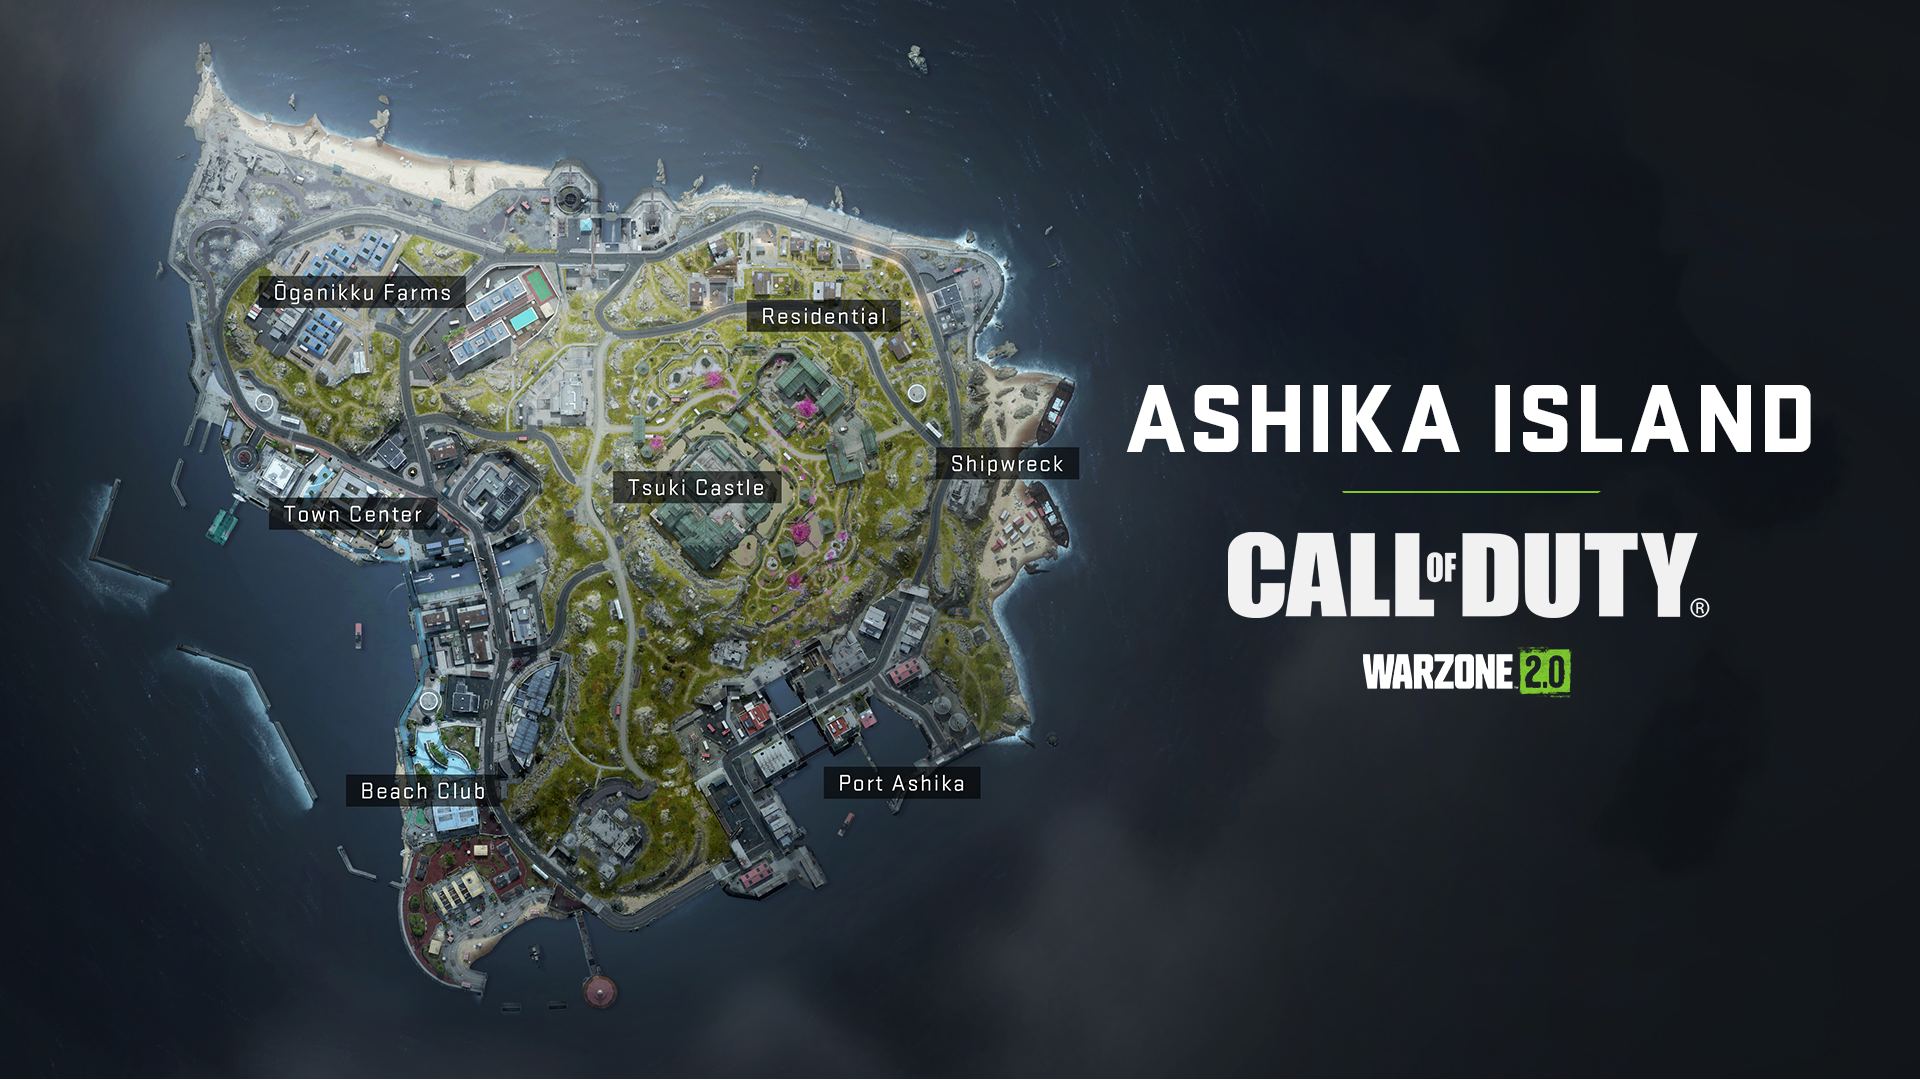 Warzone 2 Resurgence Release Date: Ashika Island can be seen